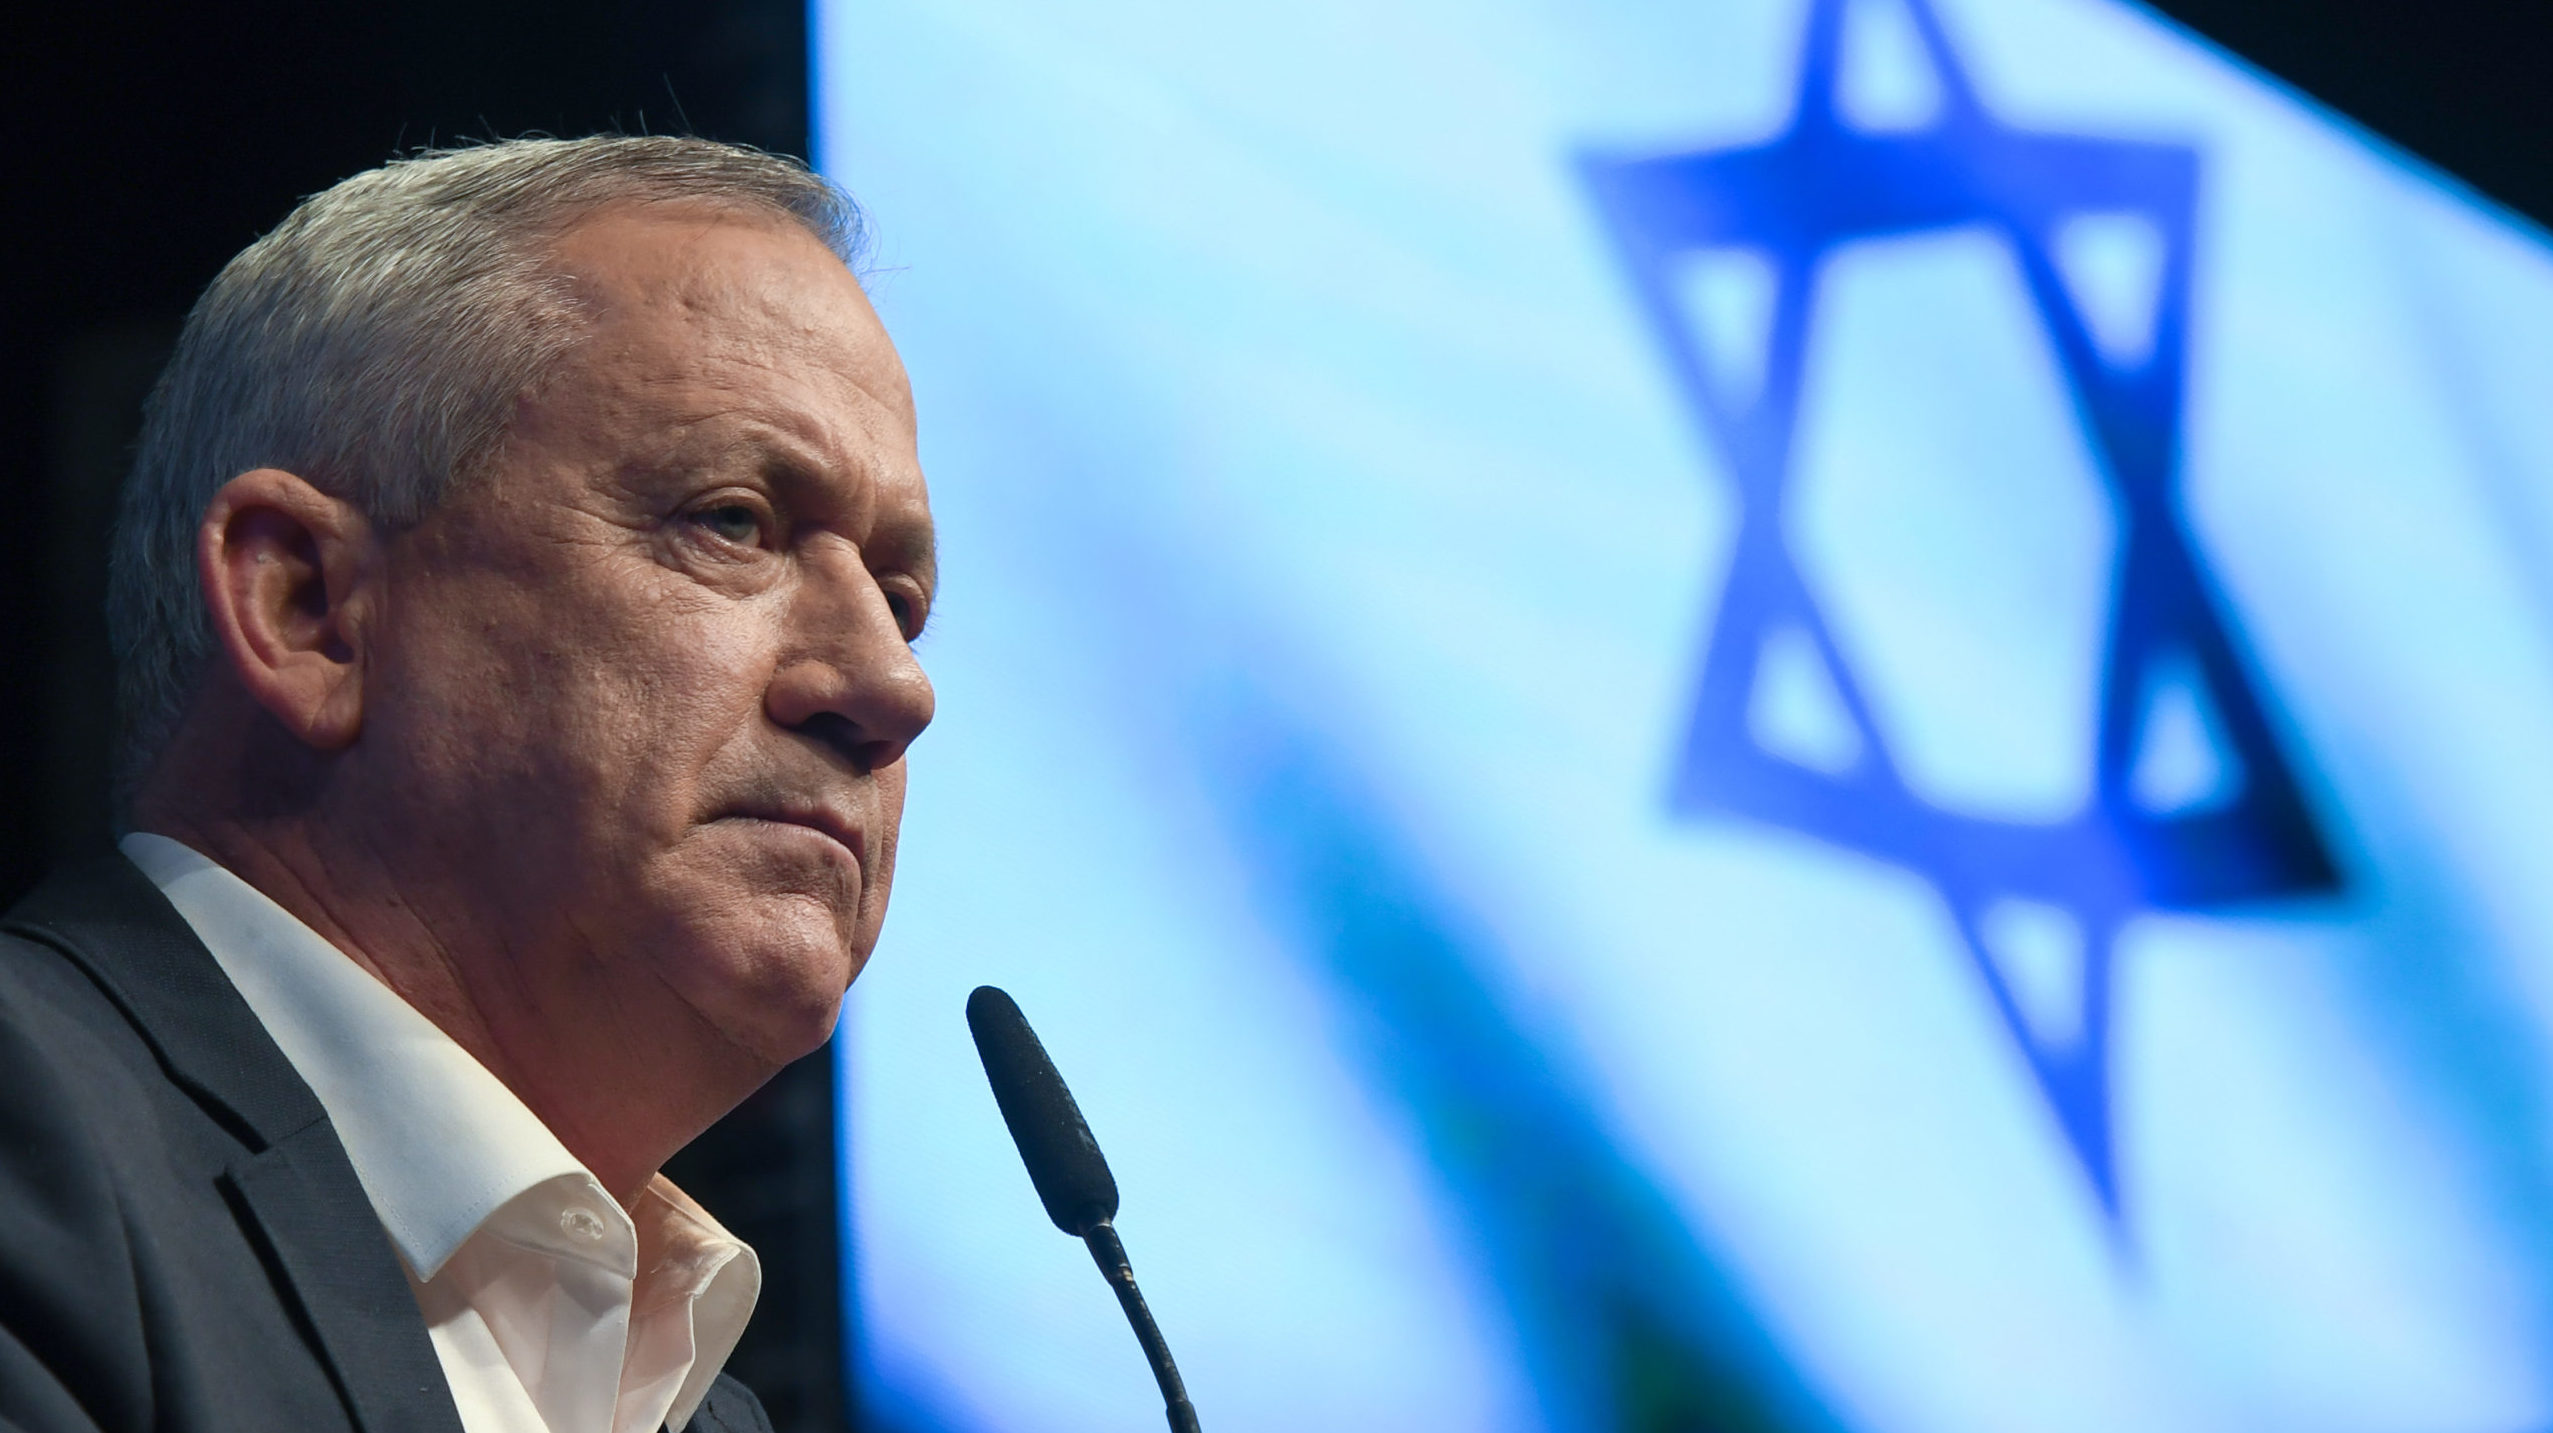 Netanyahu Rival Gains Control of Key Parliamentary Committees